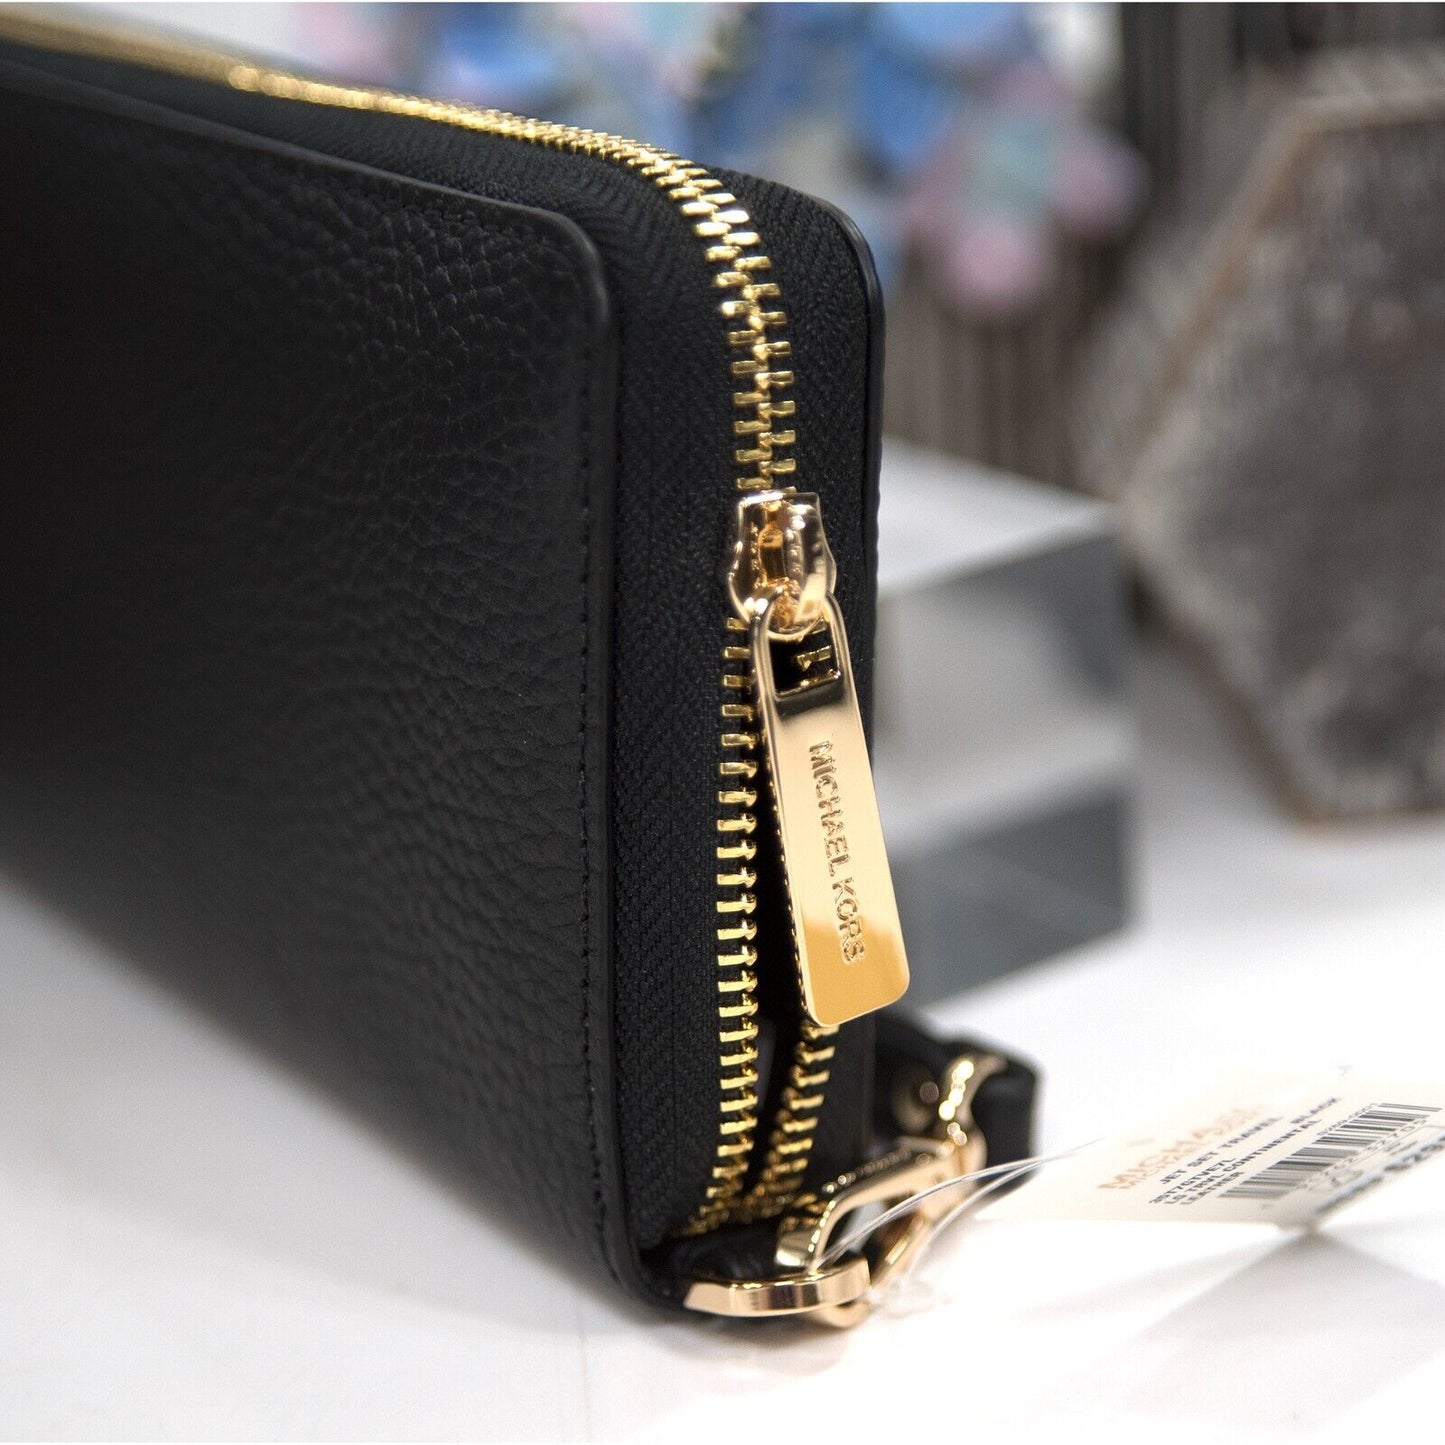 Michael Kors Black Pebbled Leather Zip Around Travel Wallet Wristlet NWT